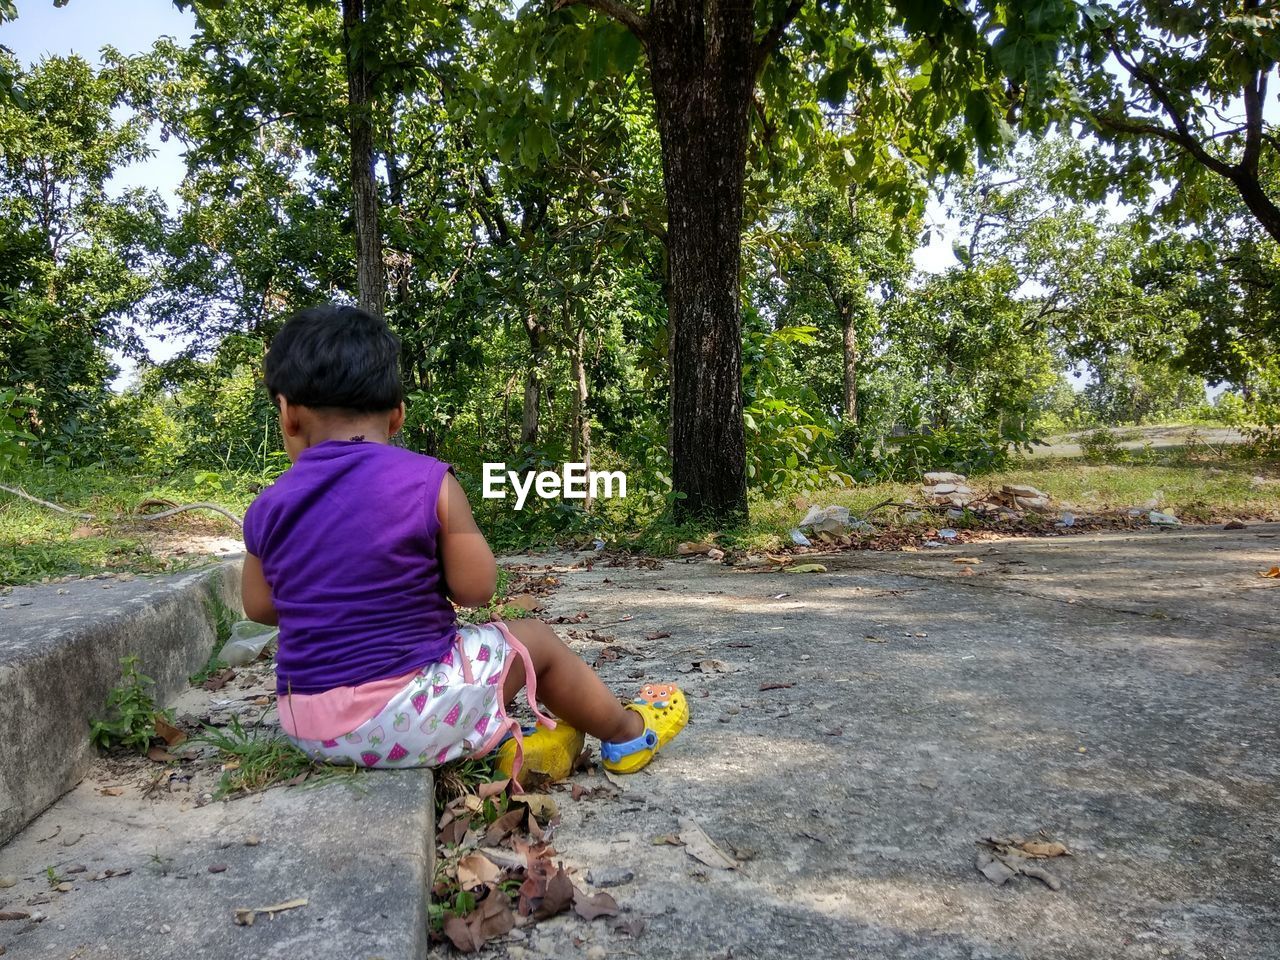 Girl sitting on street amidst trees